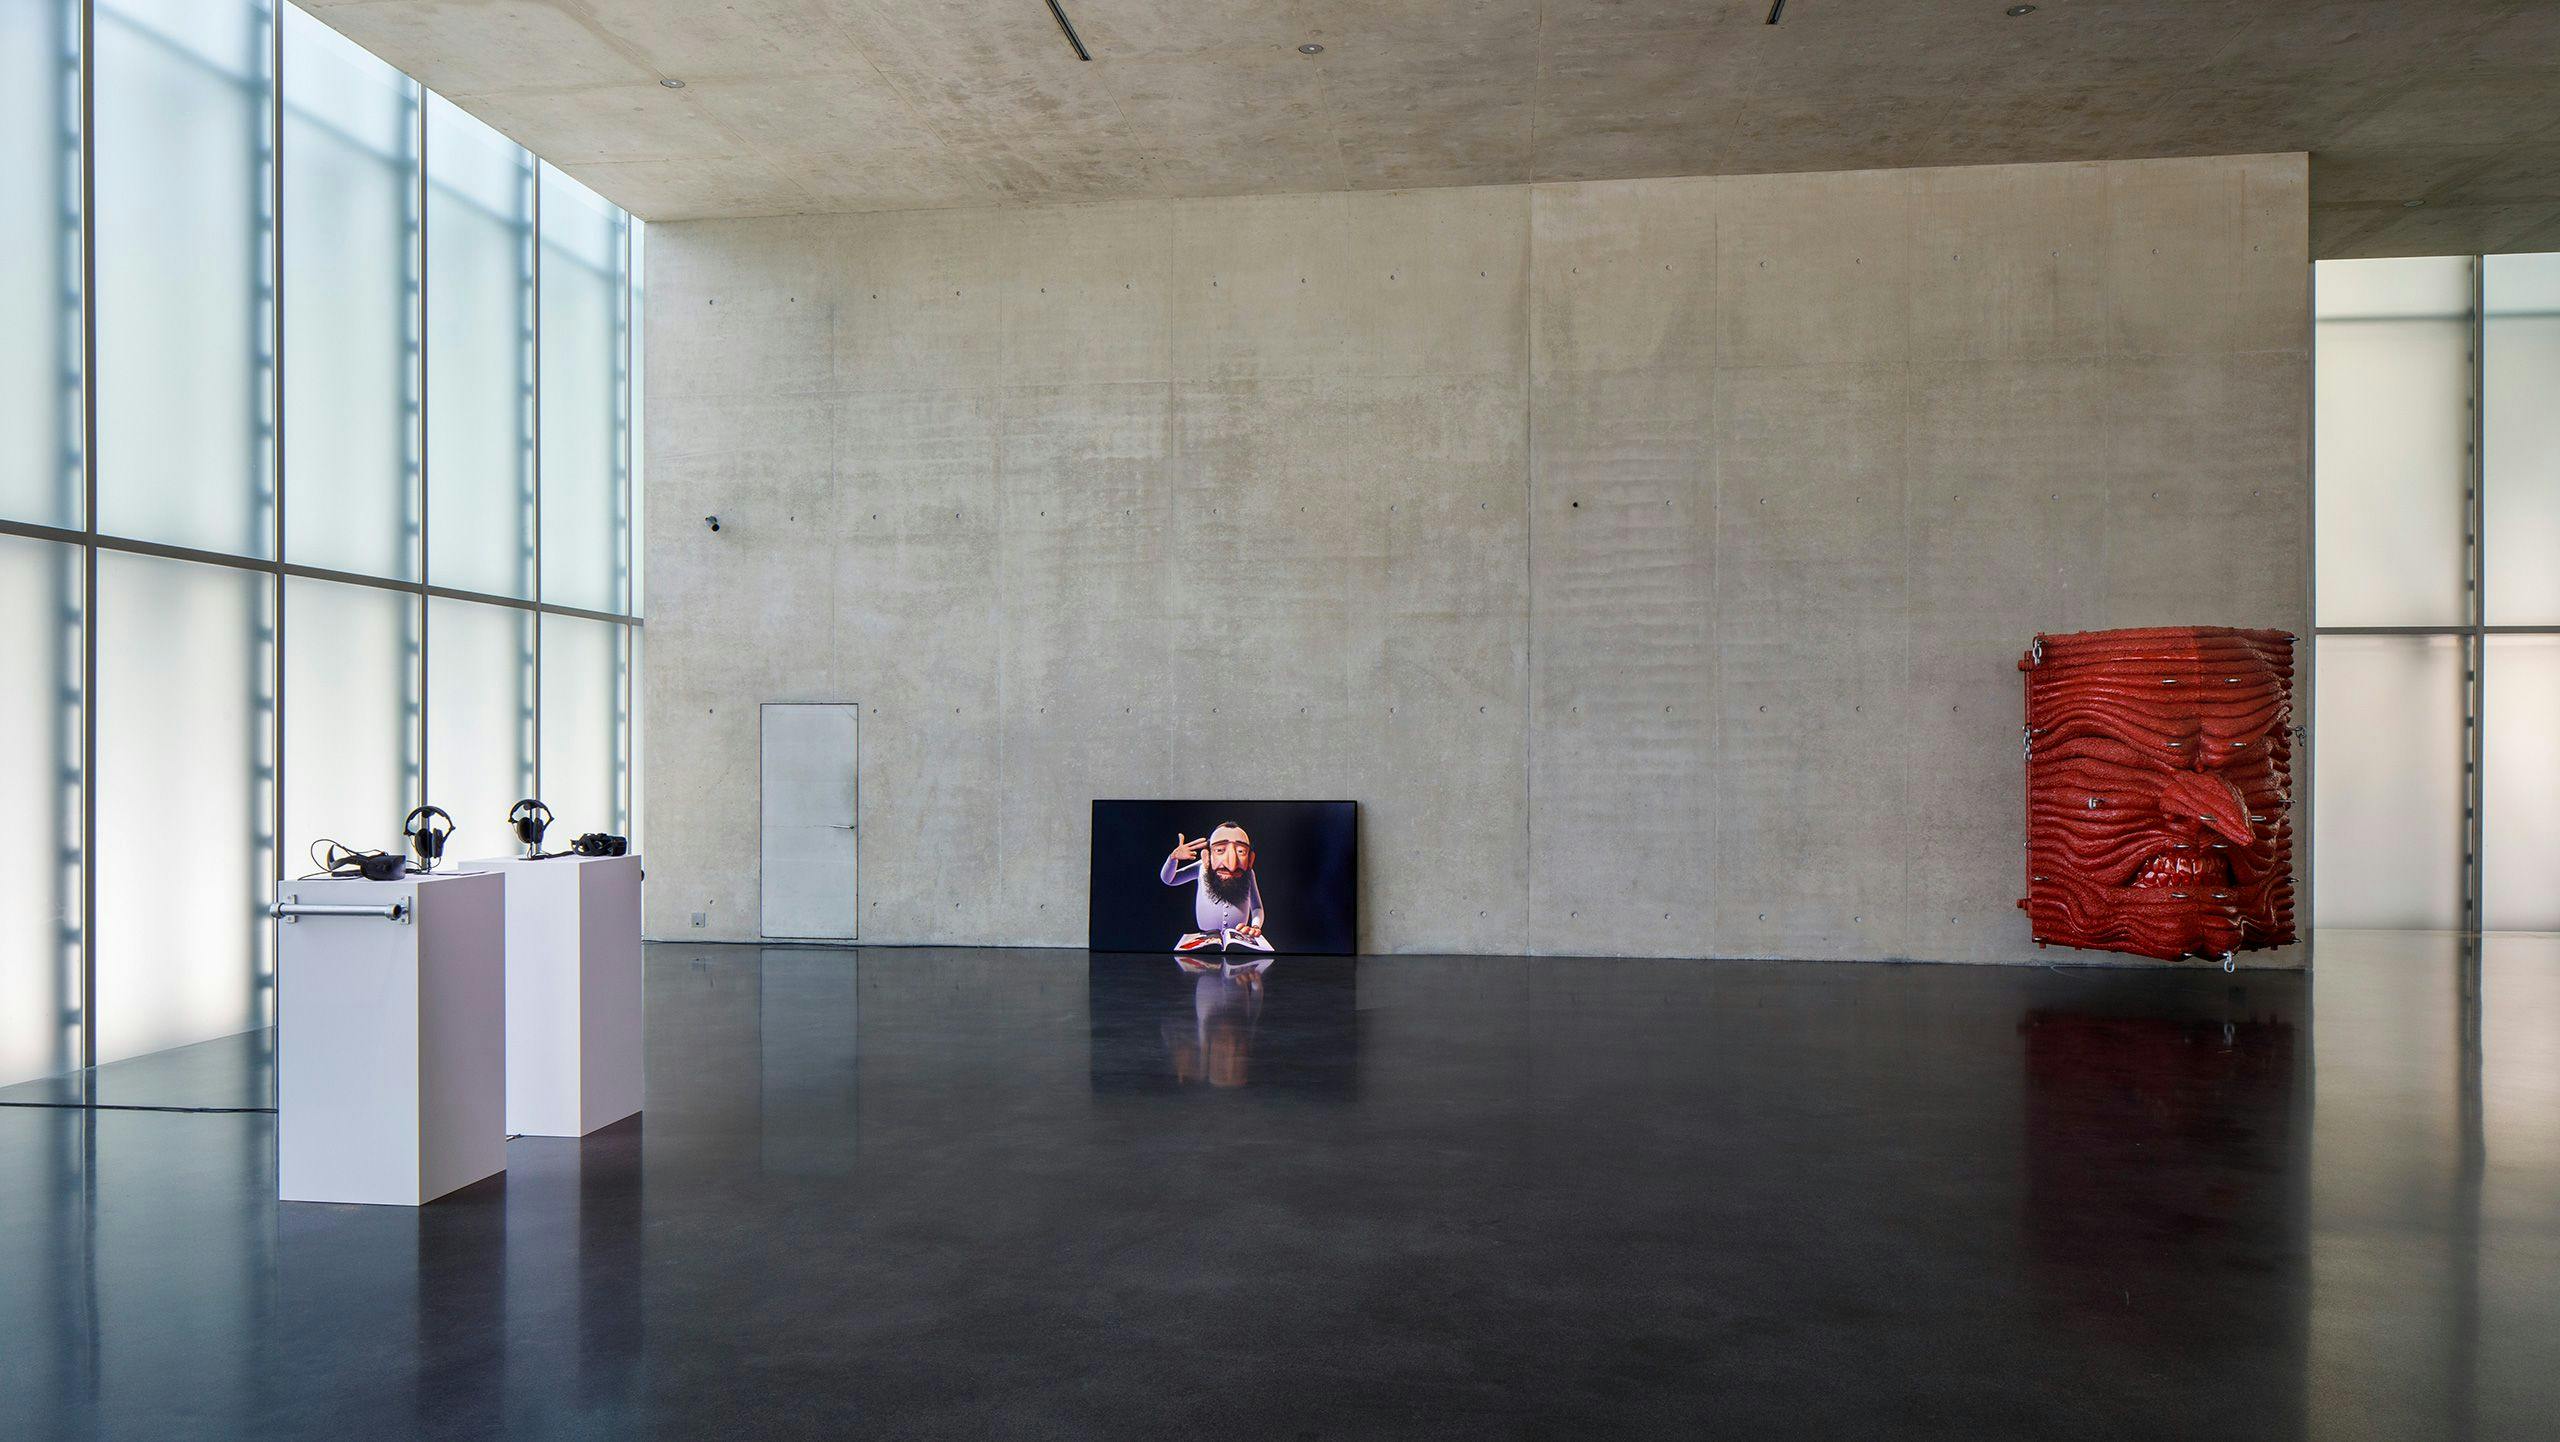 Installation view of the exhibition titled Jordan Wolfson at Kunsthaus Bregenz in Austria, dated 2022.